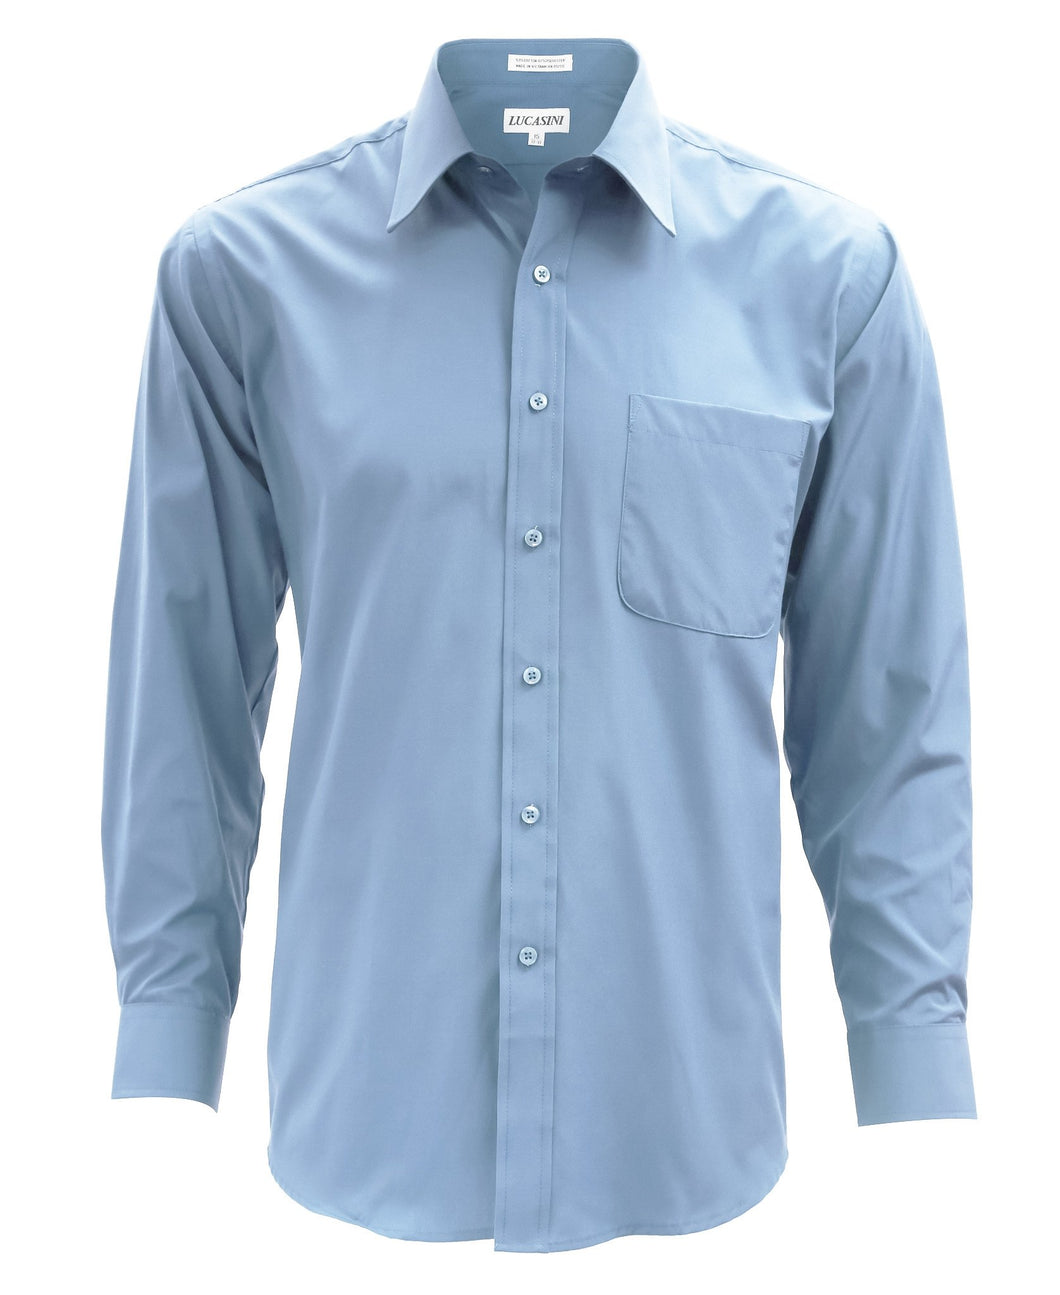 Lucasini Mens Light Blue Regular Fit 300 Series Dress Shirt - Ferrecci USA 